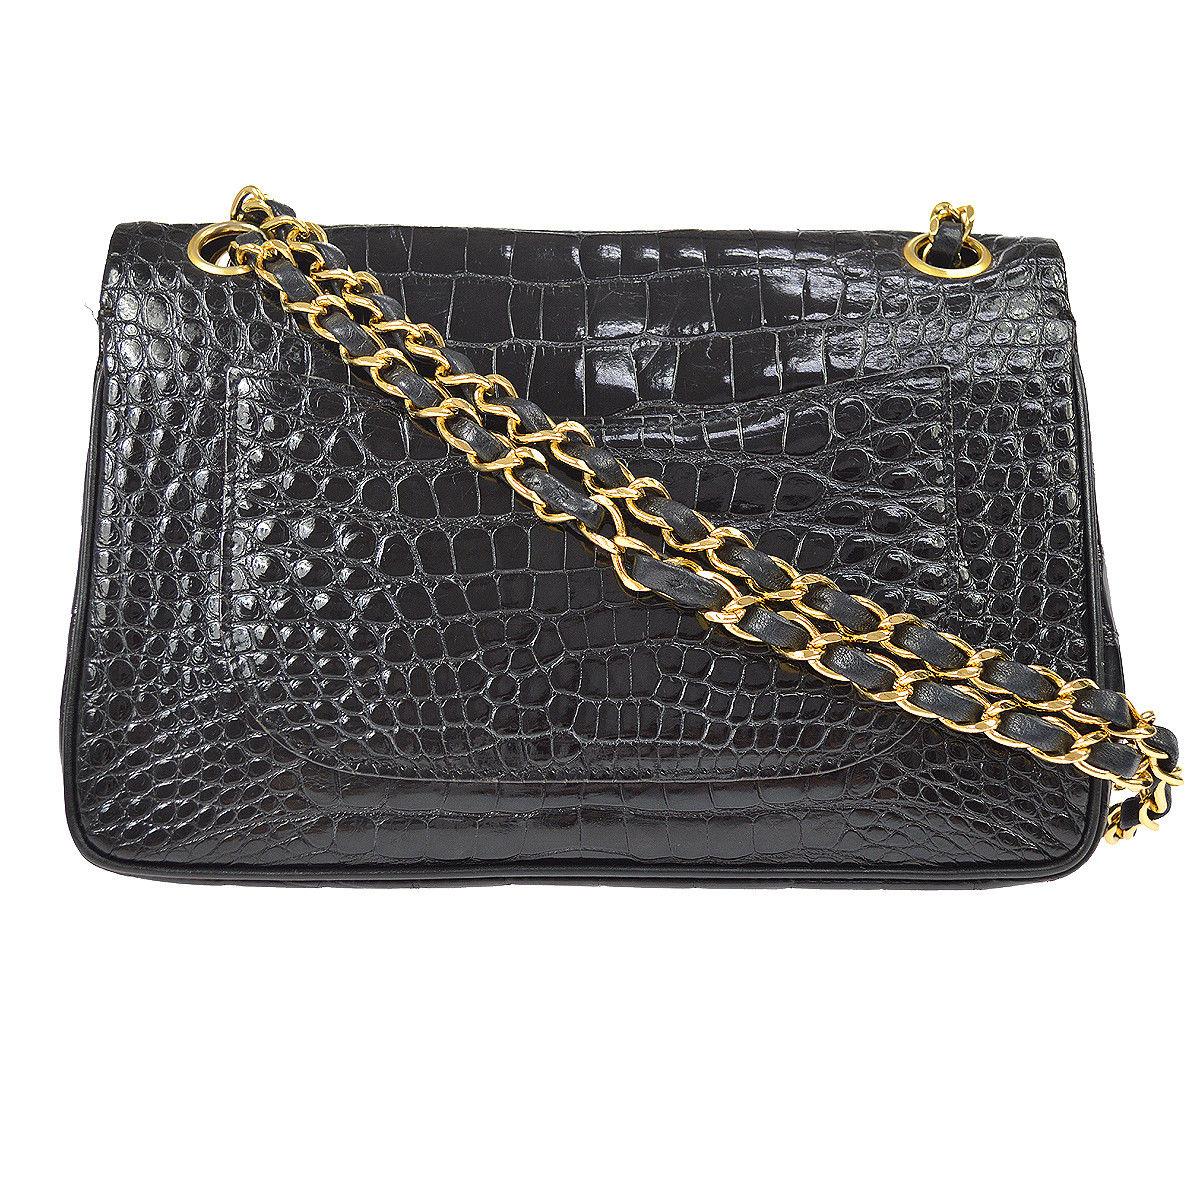 Chanel Black Crocodile Leather Gold Turnlock Evening Clutch Flap Shoulder Bag 1